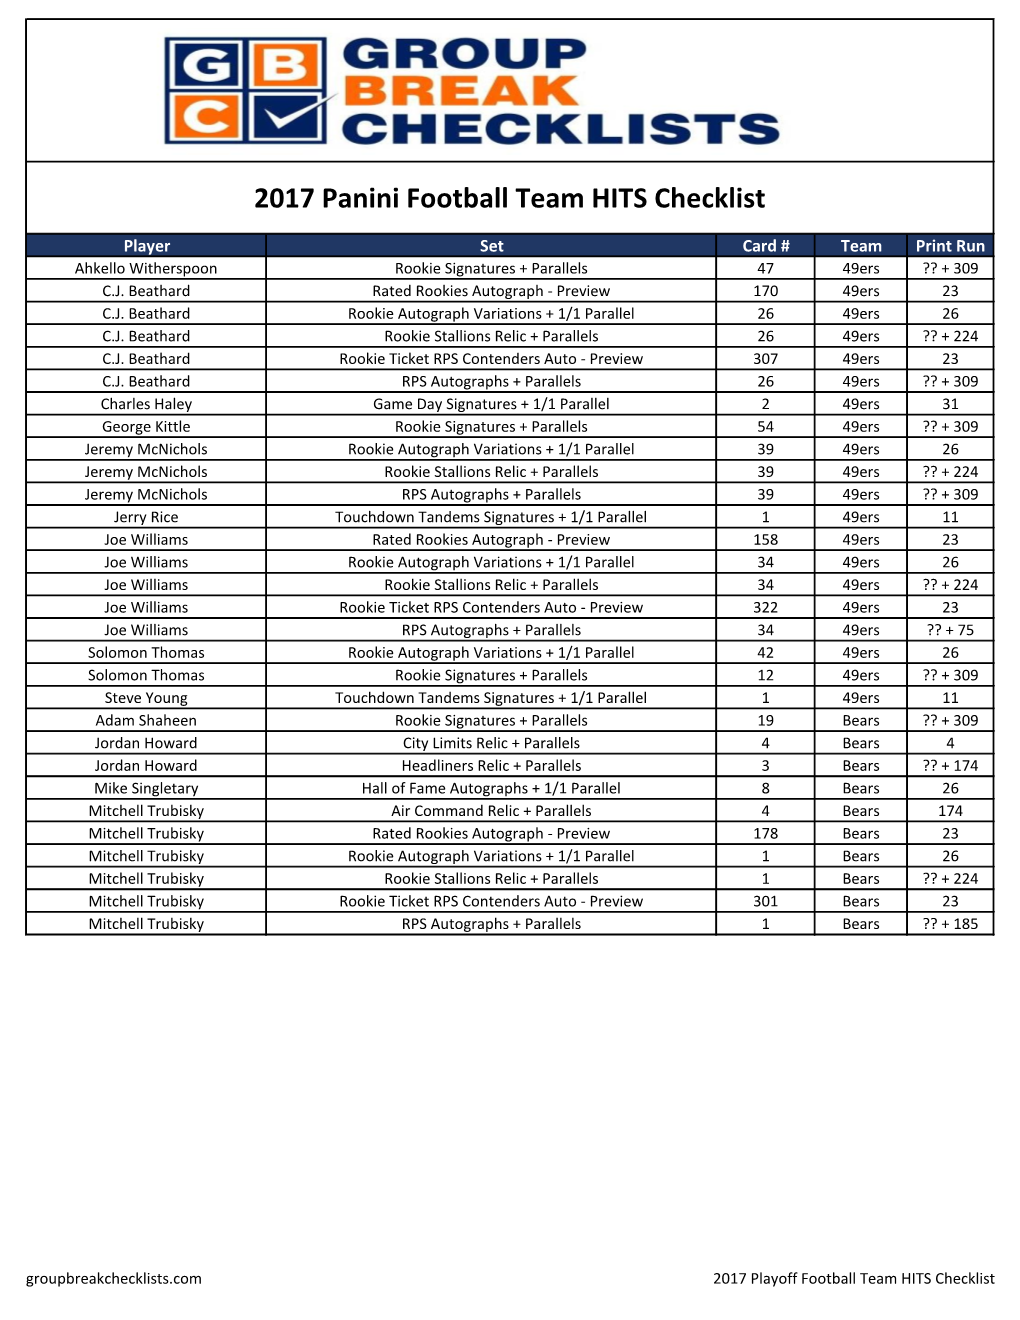 2017 Panini Playoff Football Team Checklist